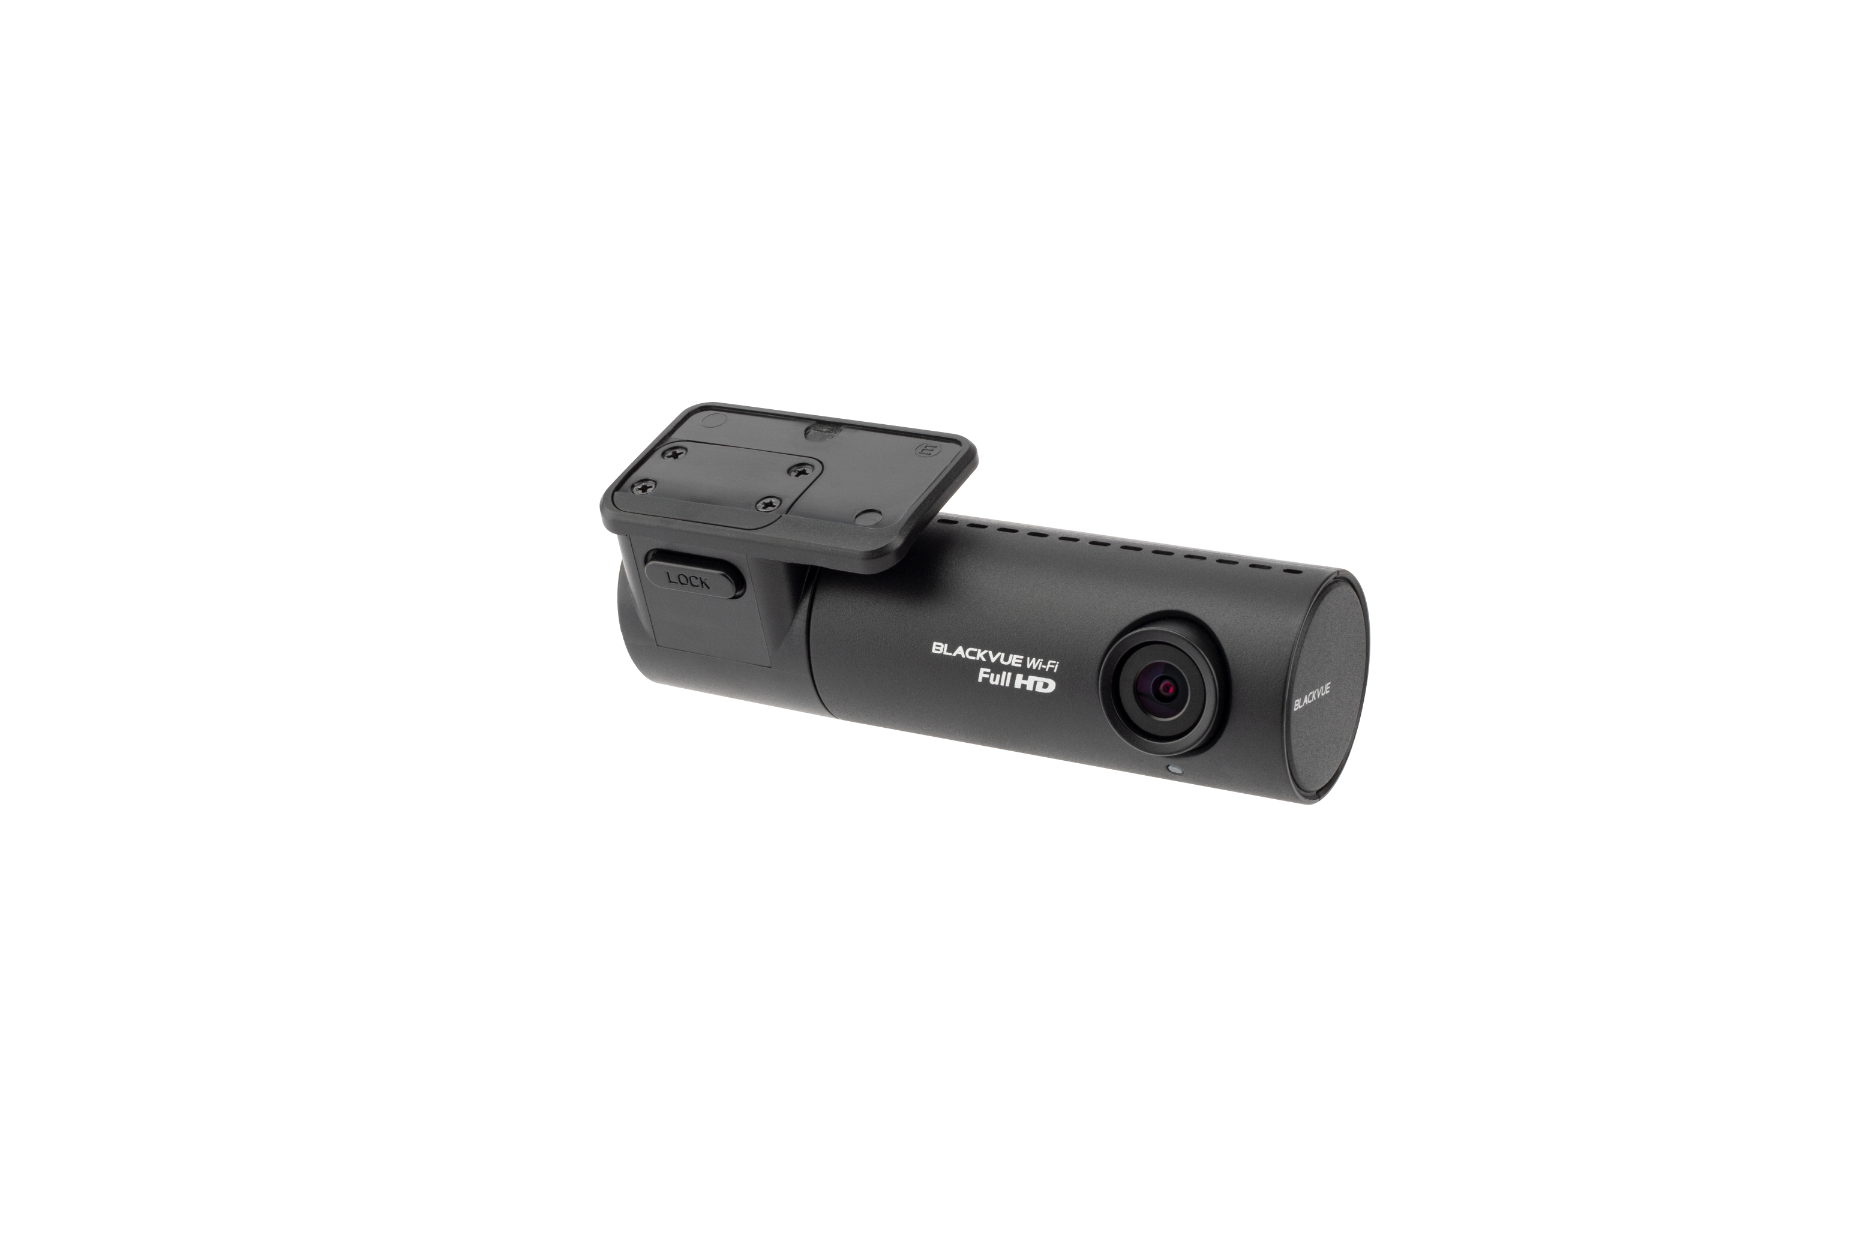 BlackVue DR590X-2CH | Simple Dual Full HD Wi-Fi Dashcam